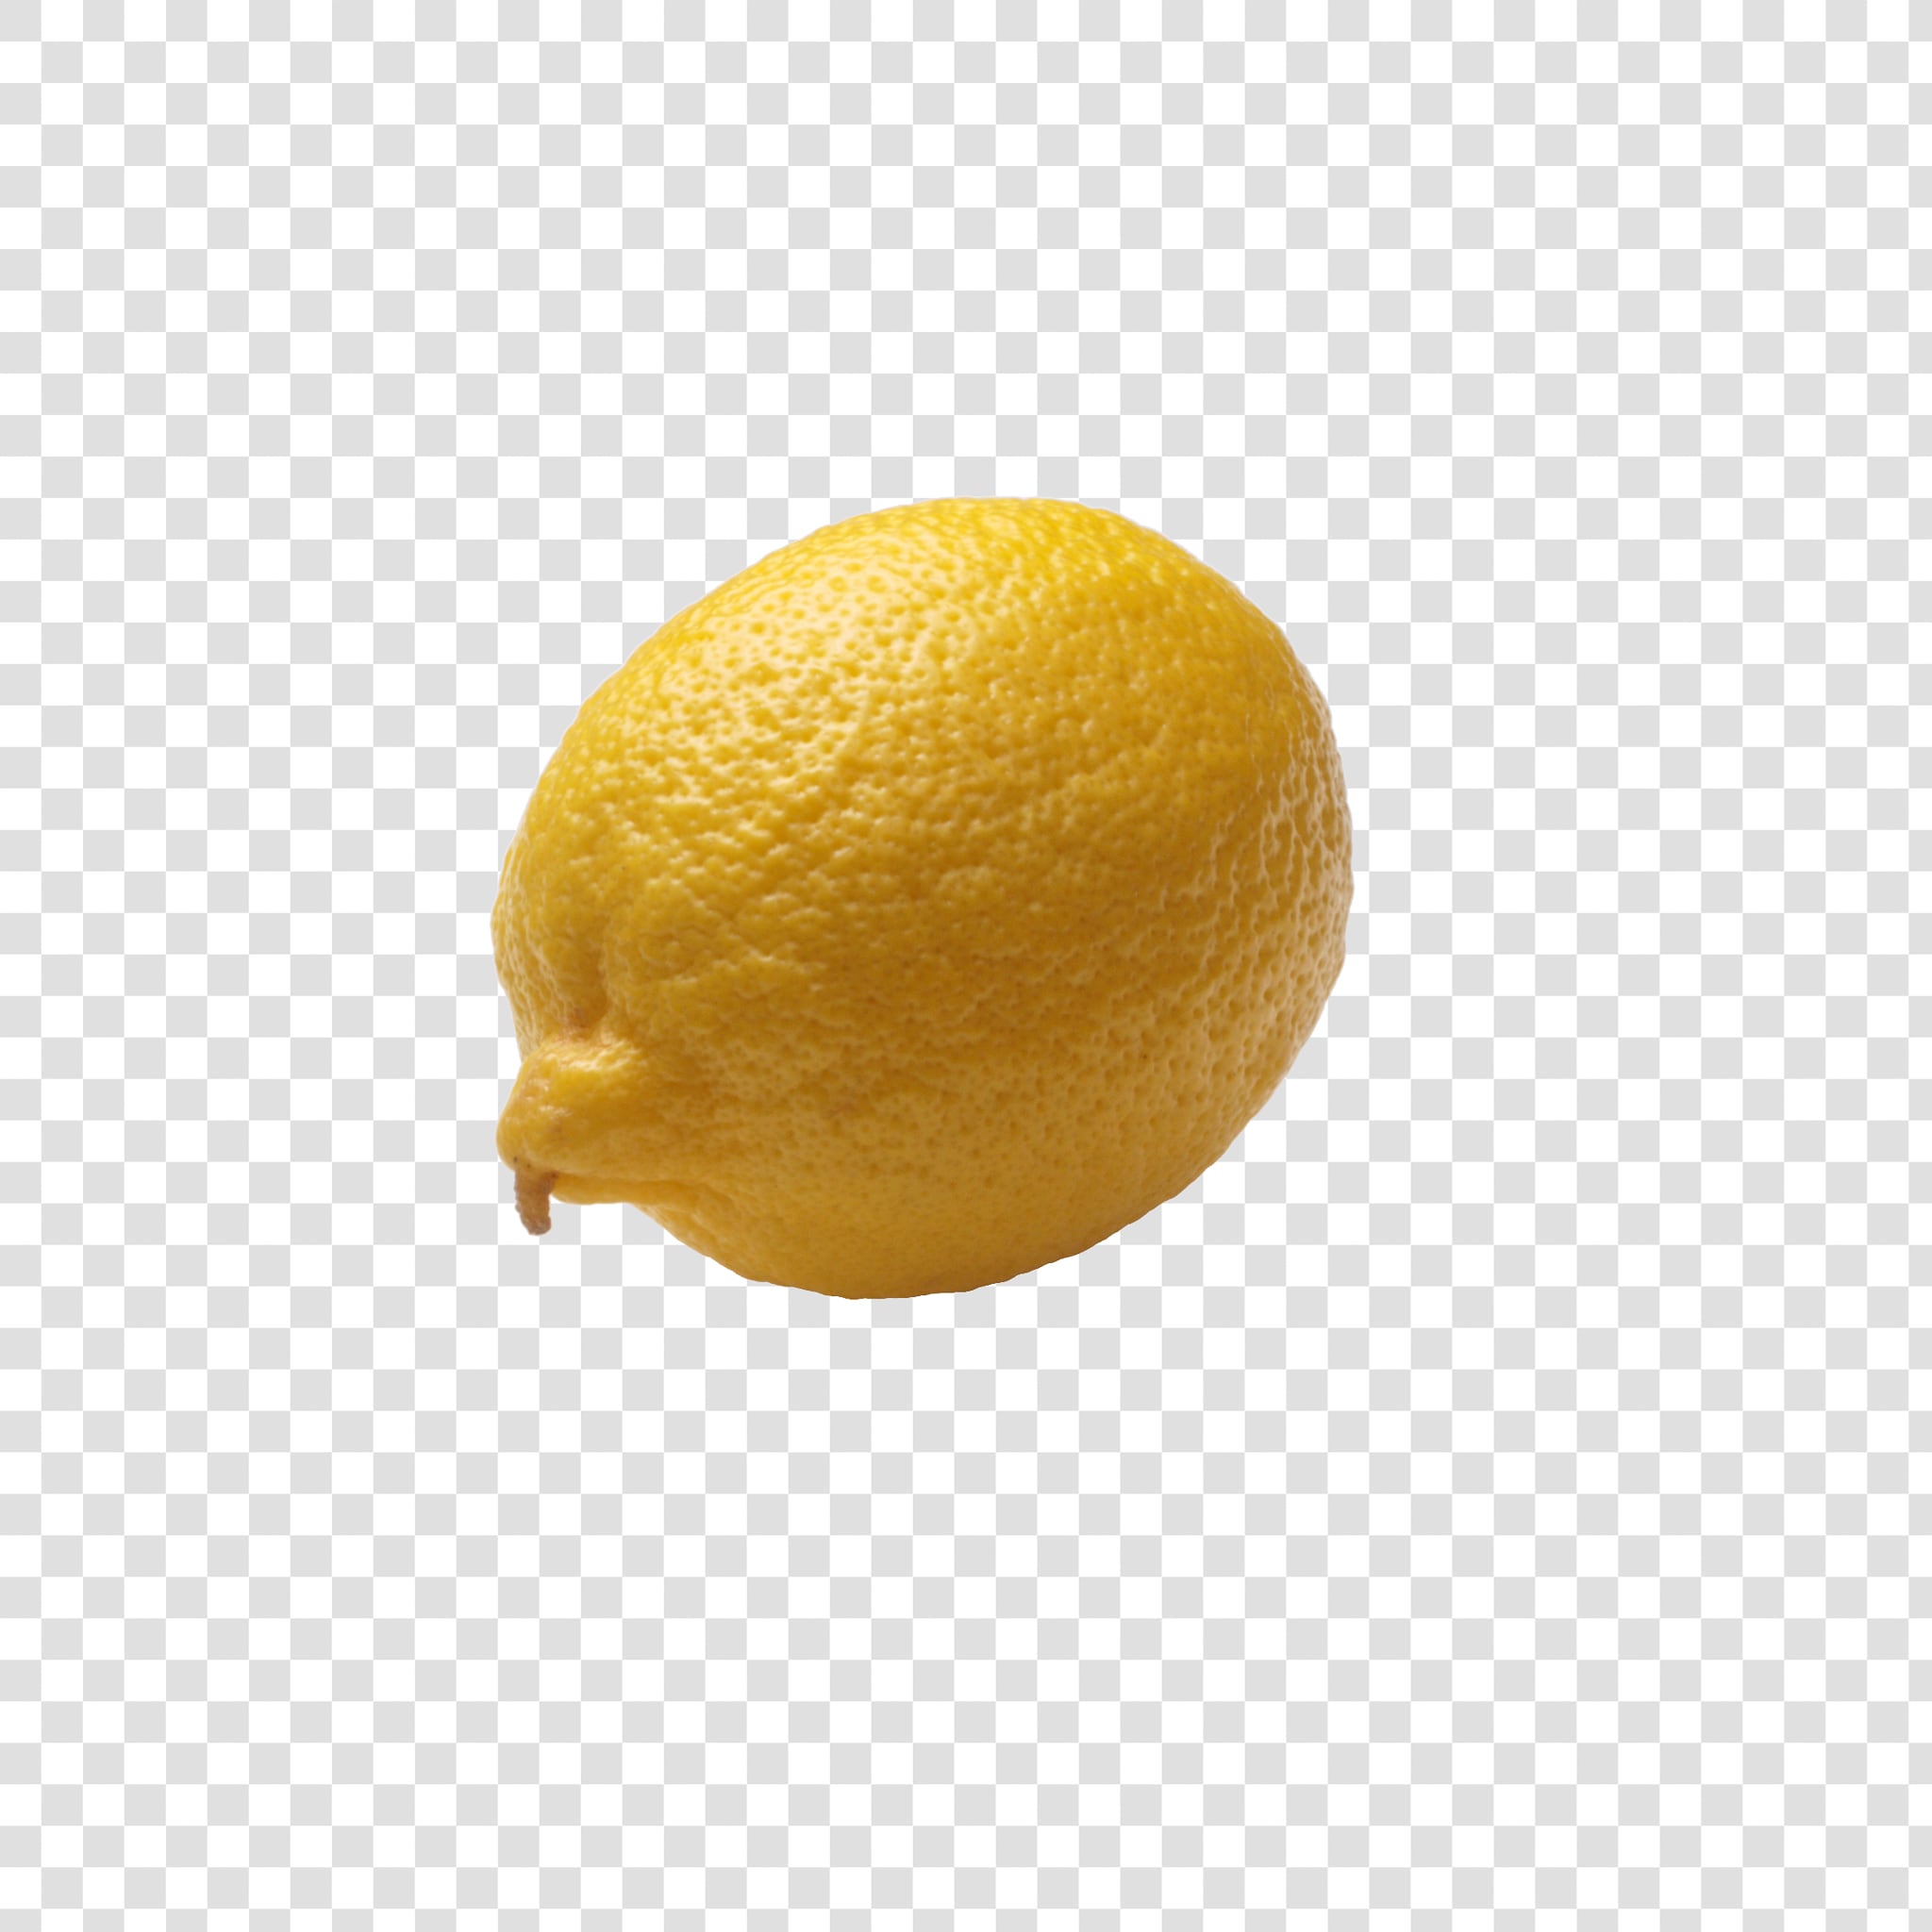 Lemon image asset with transparent background